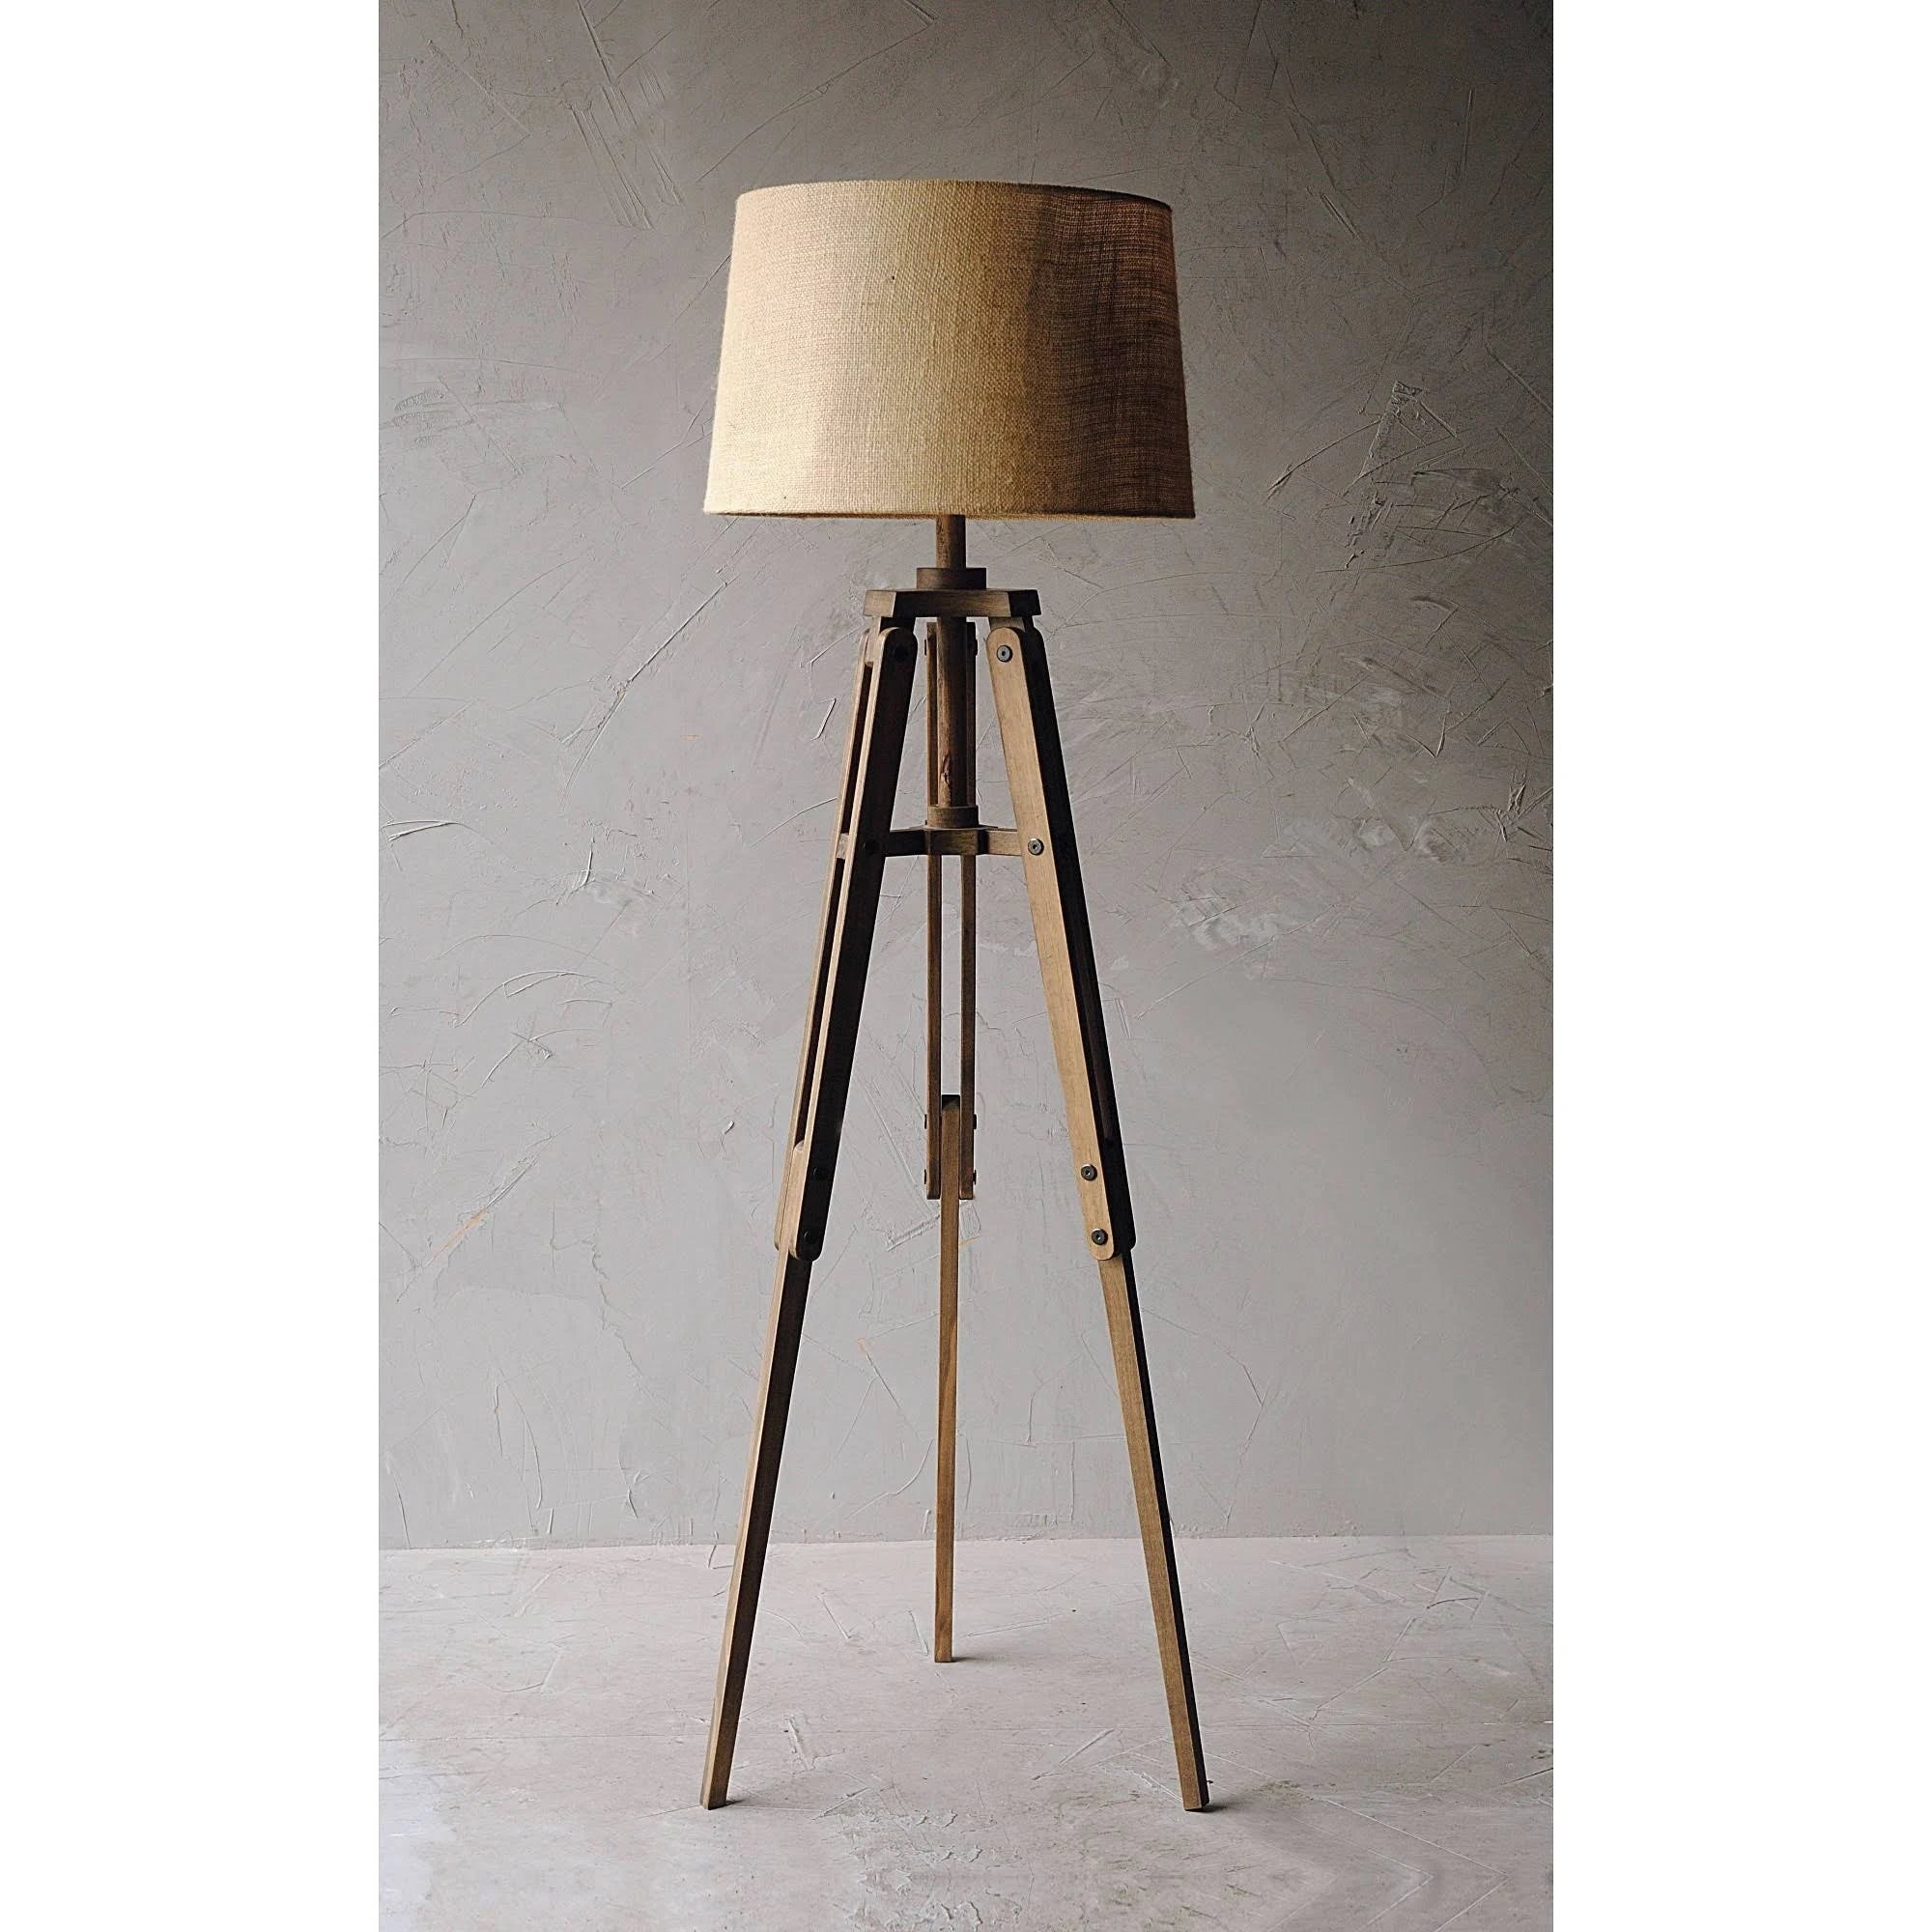 Mariner Tripod Style Wood Floor Lamp with Burlap Drum Shade - Image 1